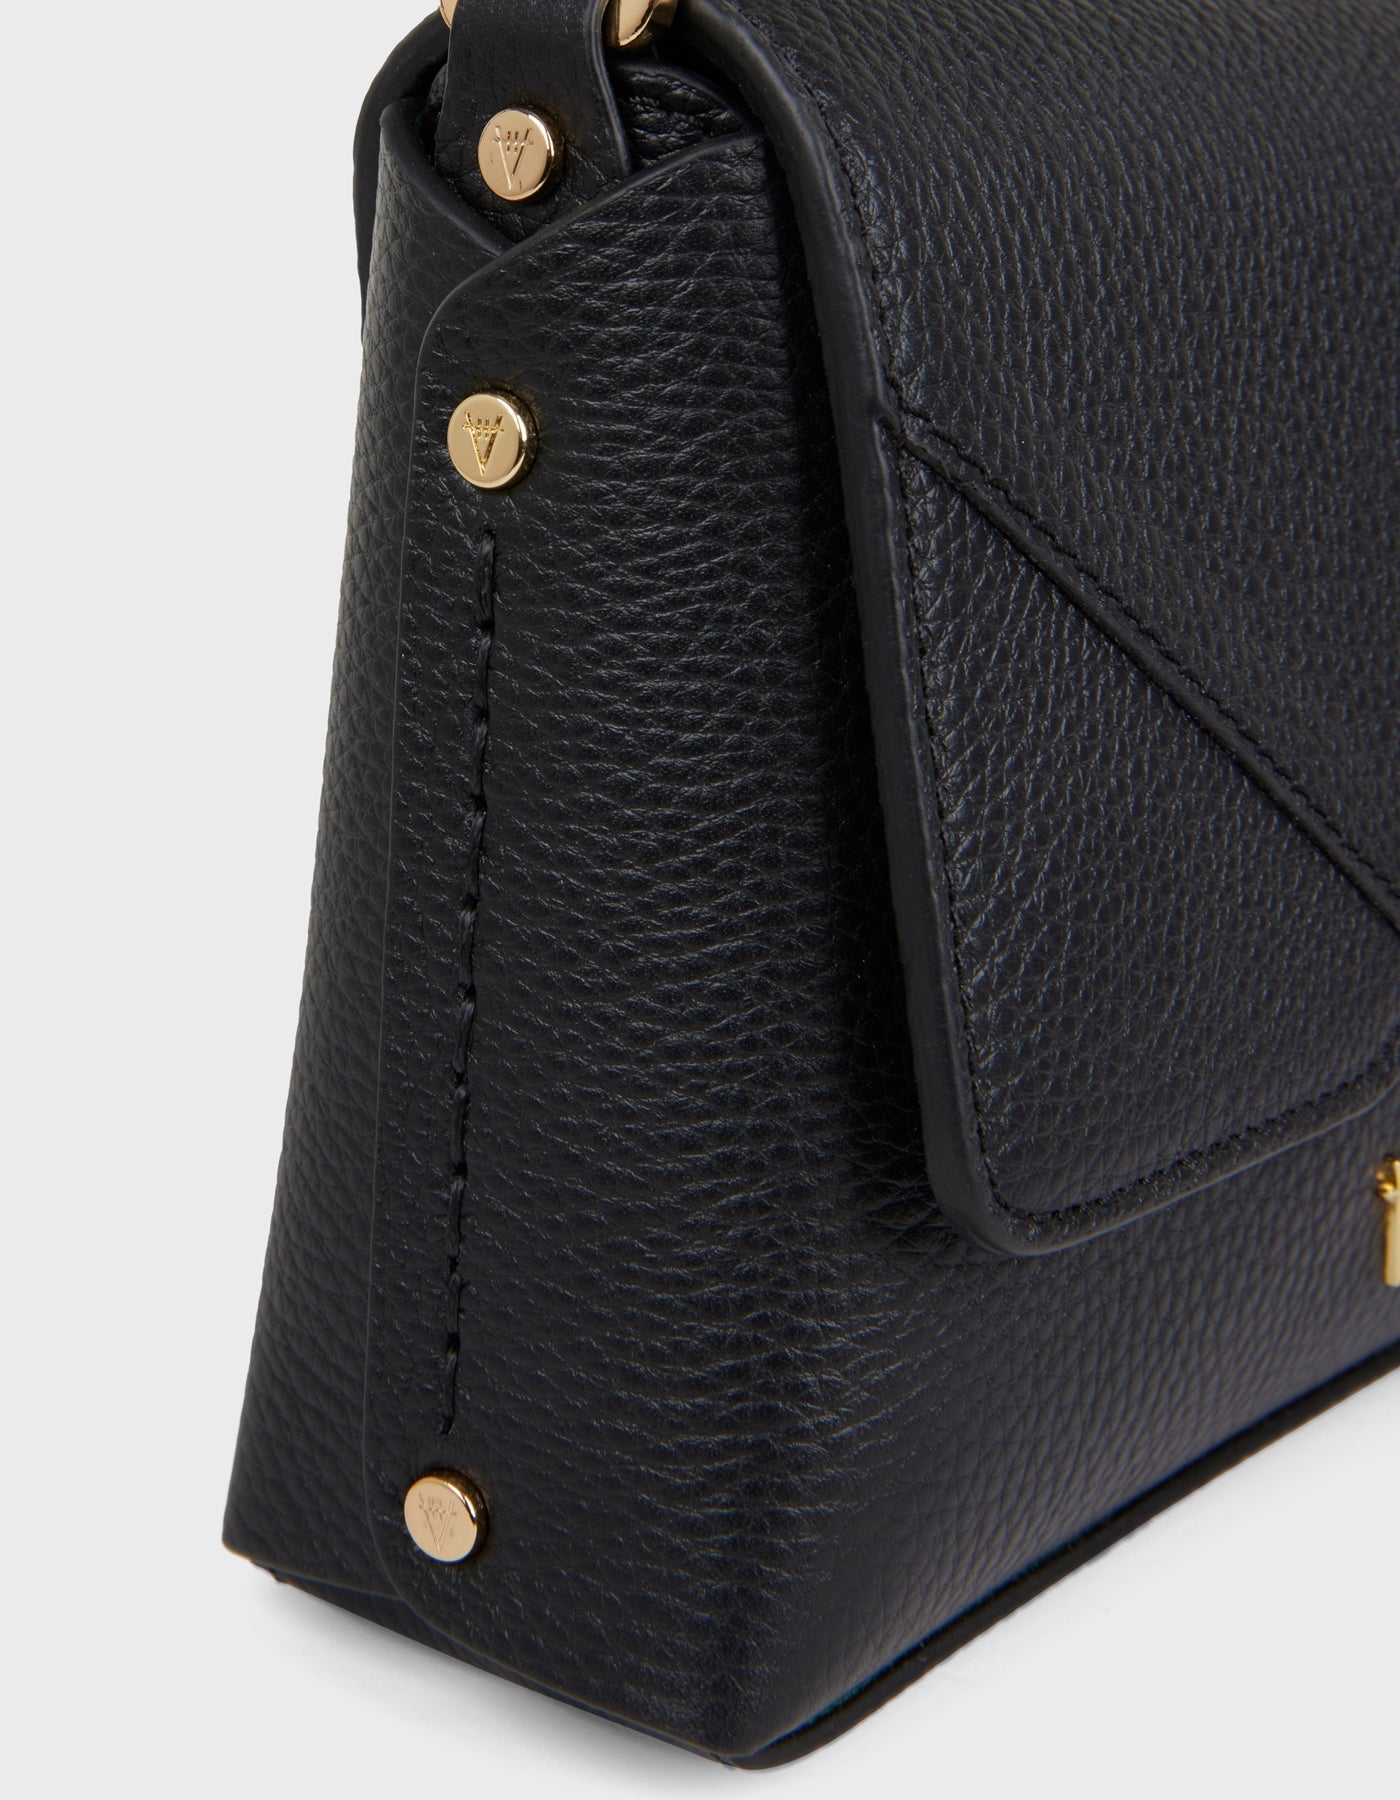 HiVa Atelier | Mini Mare Shoulder Bag Black | Beautiful and Versatile Leather Accessories